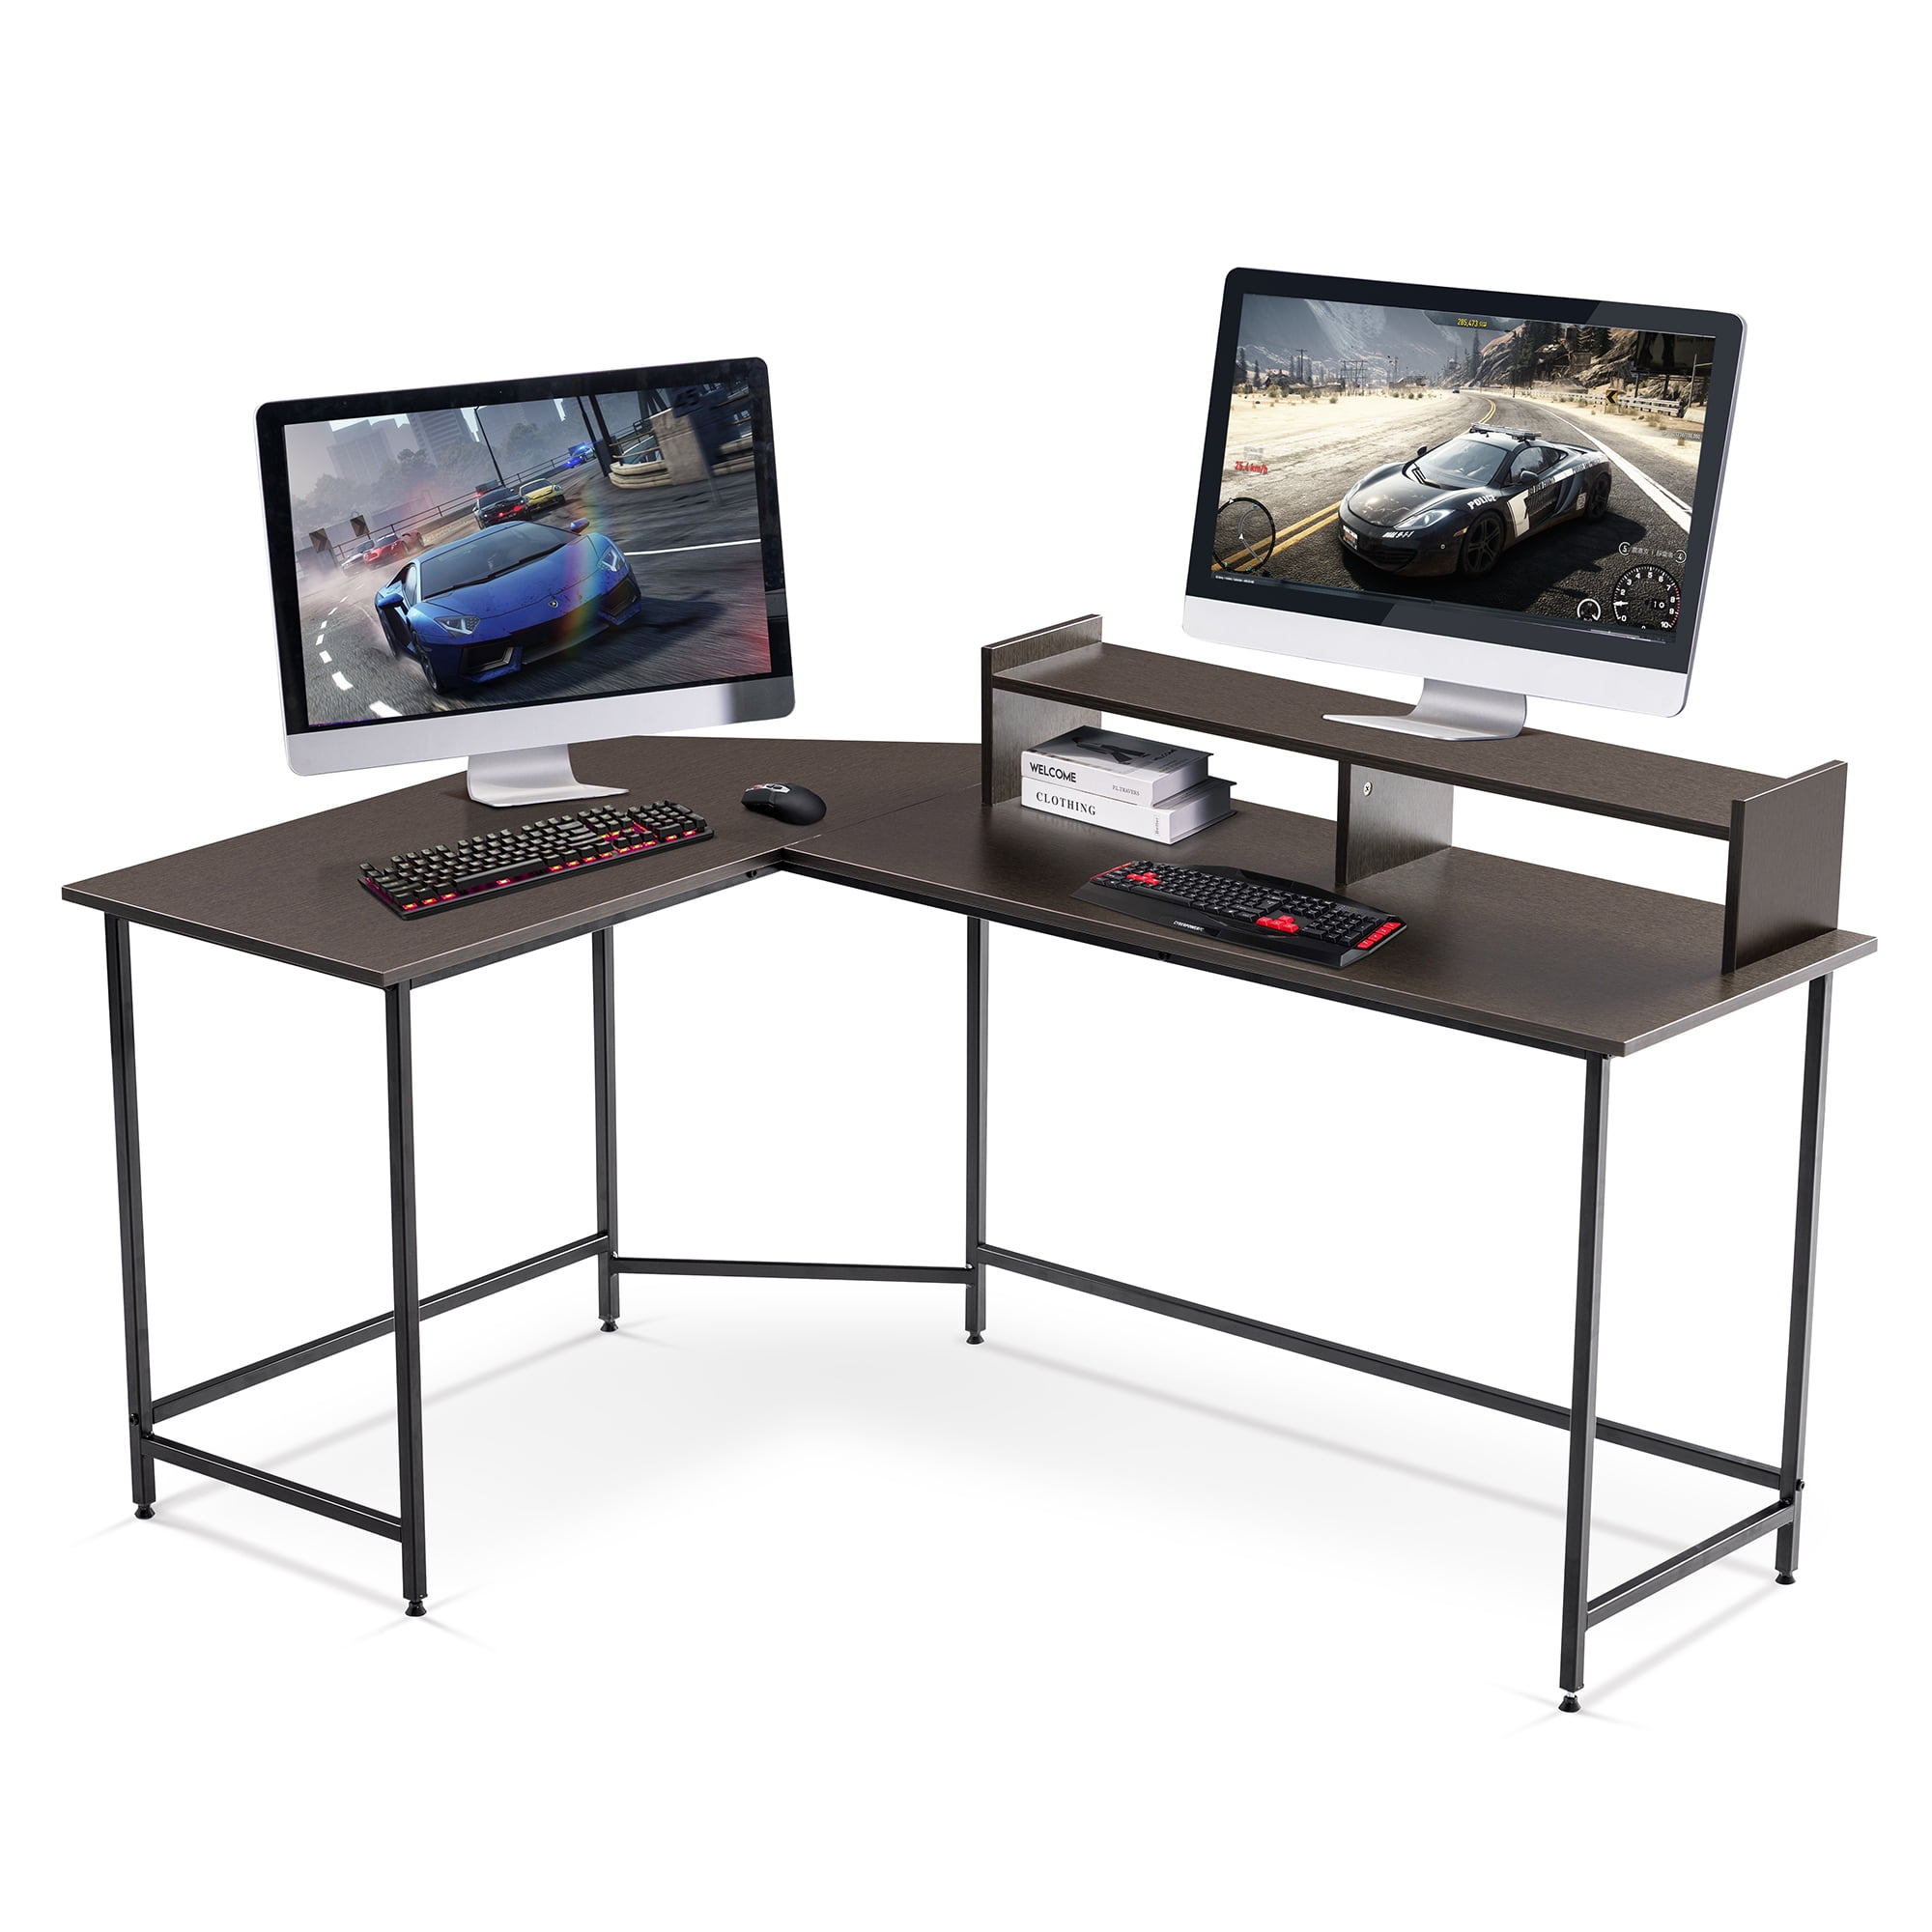 Details about   Ivinta L-Shaped Corner Desk Computer Gaming Desk with Monitor Stand Riser 